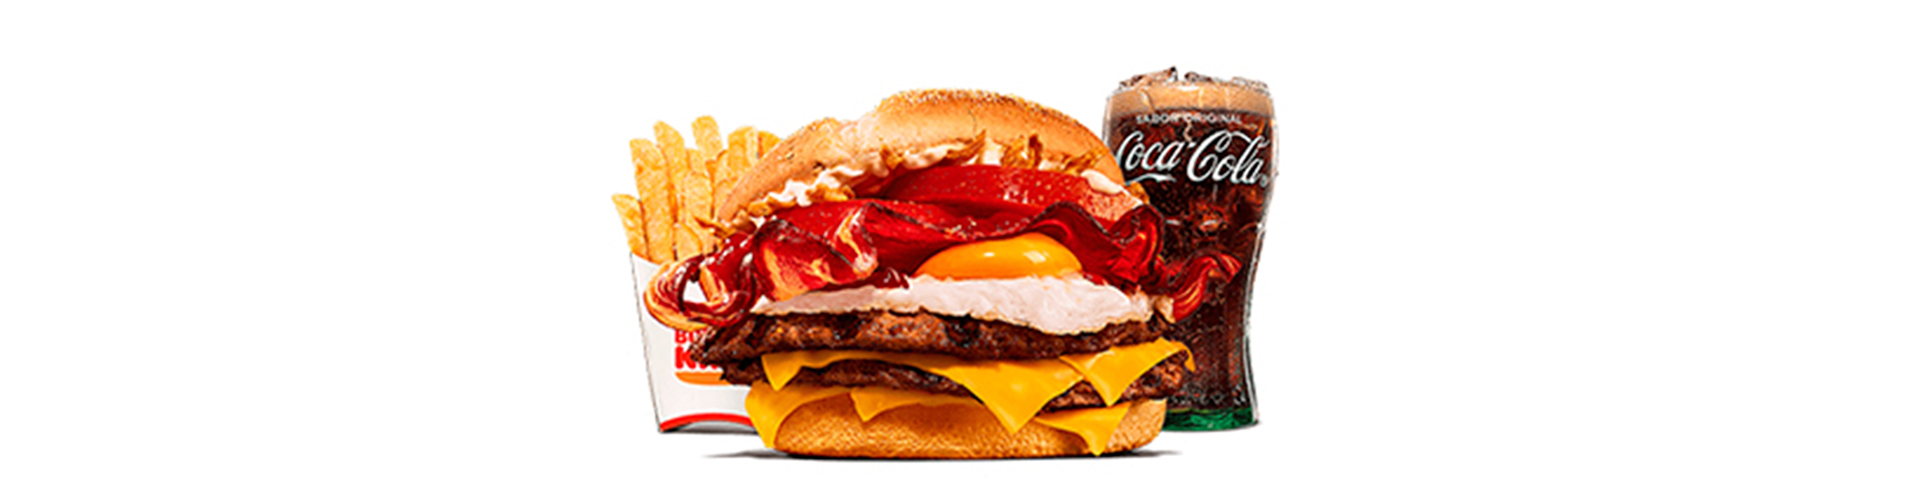 burgerking-40002126-cocacola-zero-ensalada